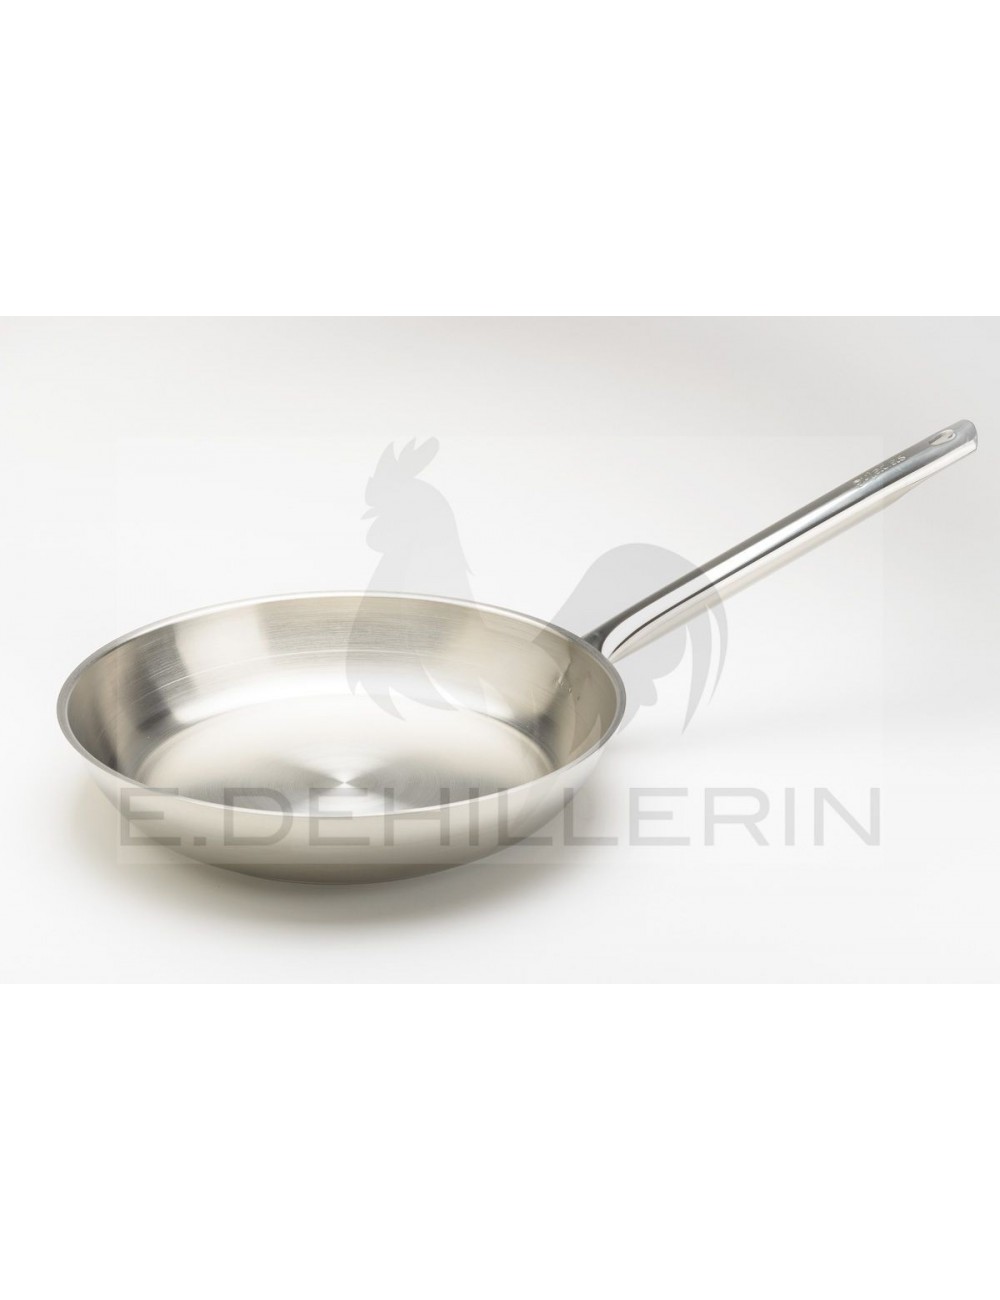 https://www.edehillerin.fr/743-large_default/stove-round-pro-stainless-steel.jpg